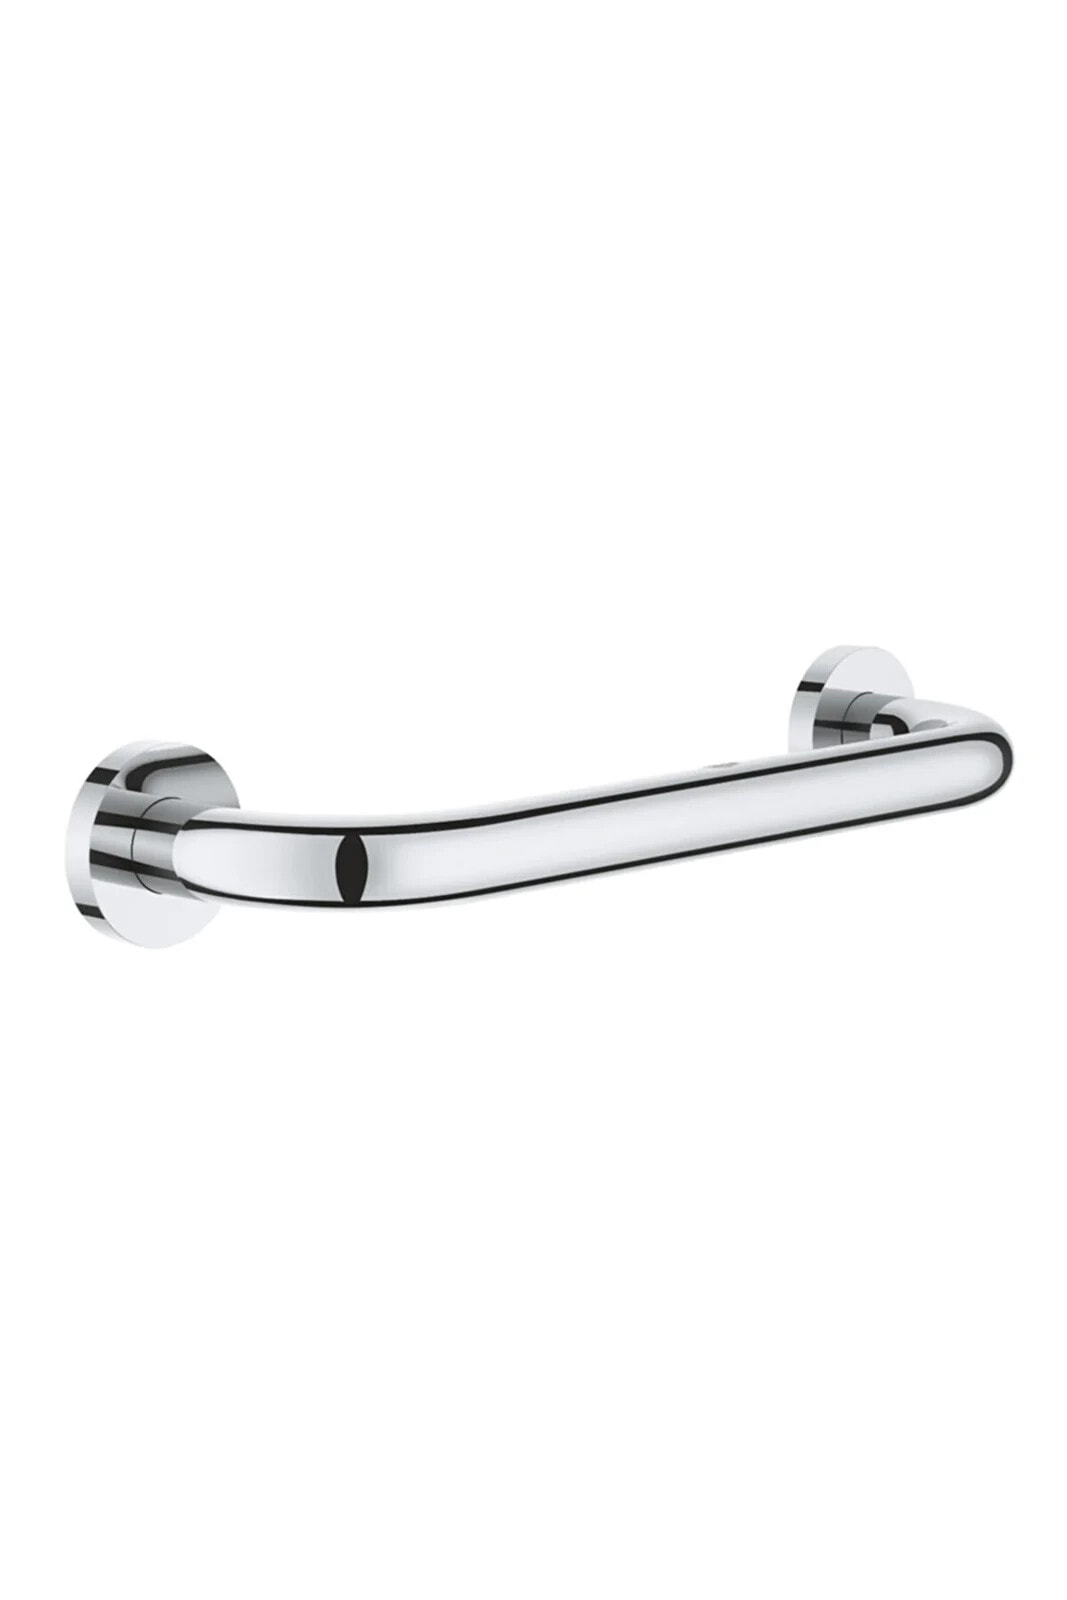 Essentials Banyo Tutamağı - 40421001